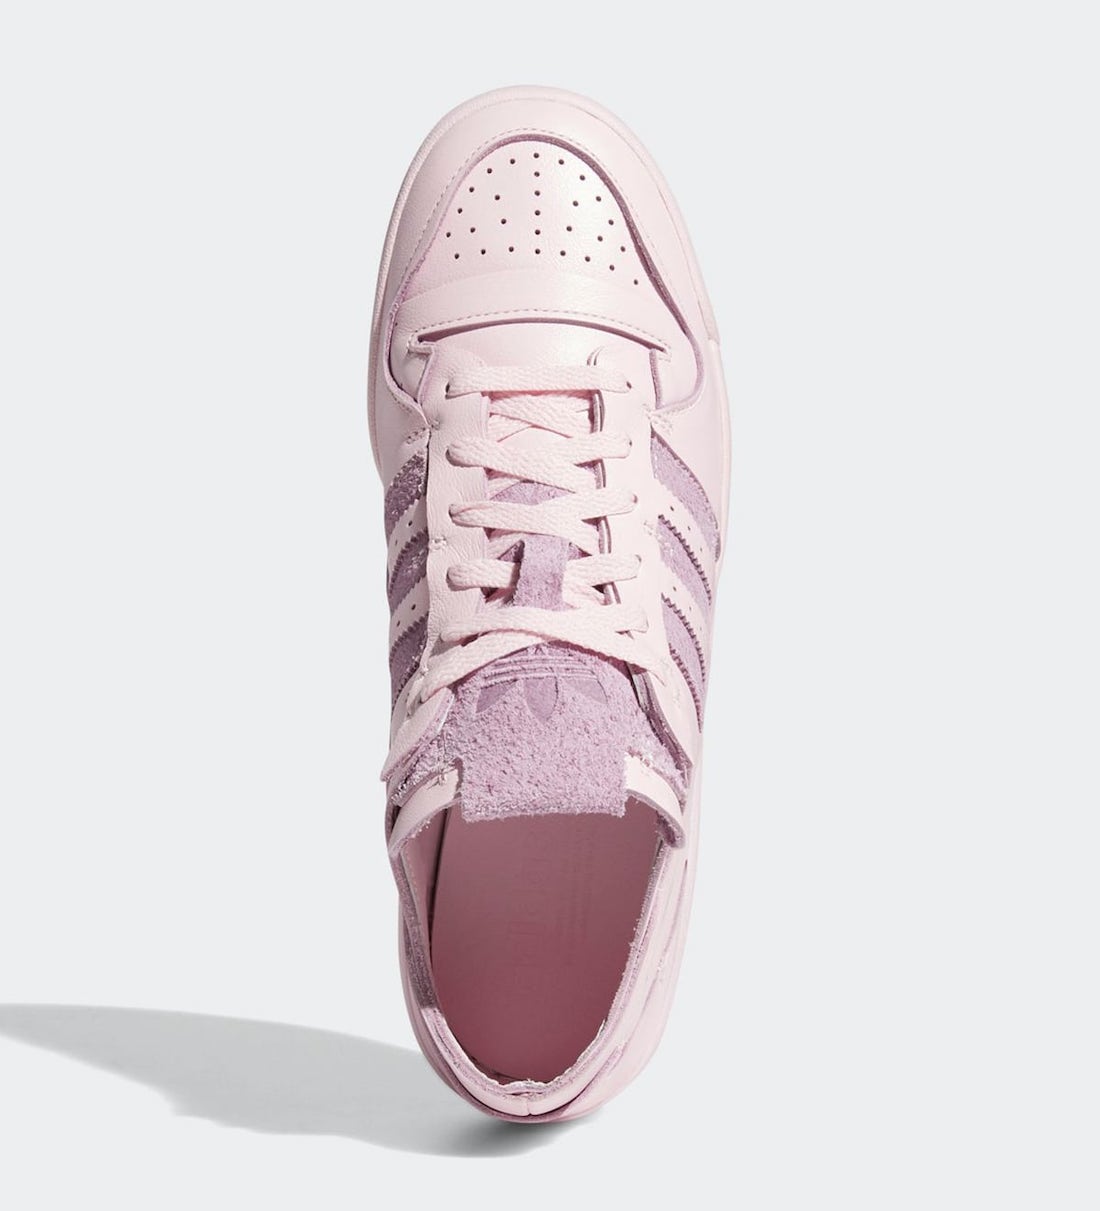 adidas Forum 84 Low Minimalist Pink FY8277 Release Date Info | SneakerFiles